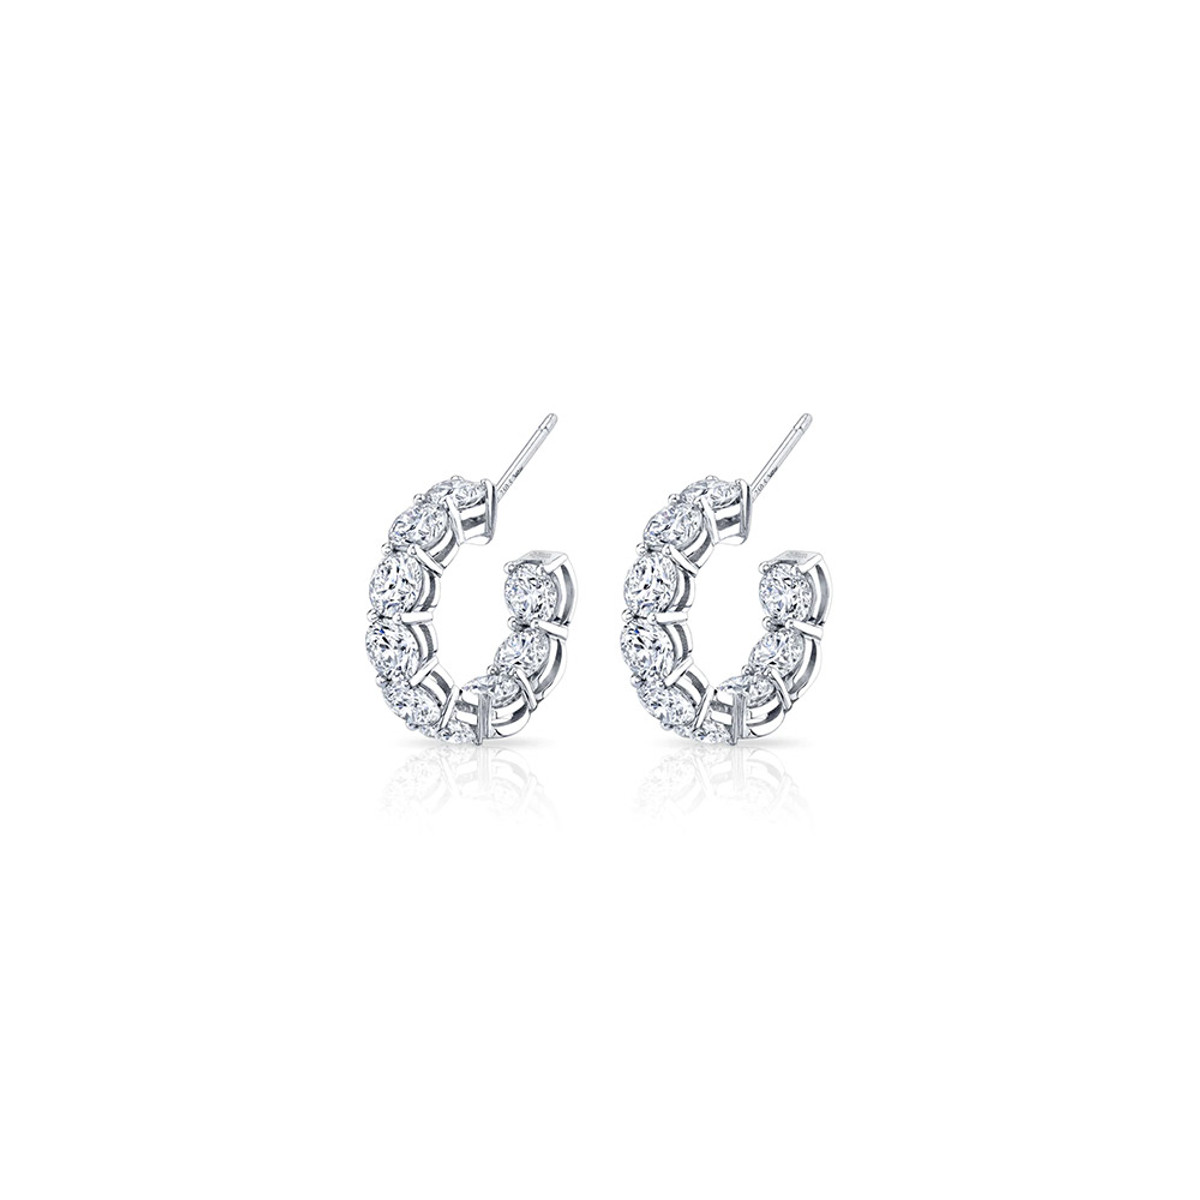 Hyde Park Collection 18K White Gold Diamond Hoop Earrings-39511